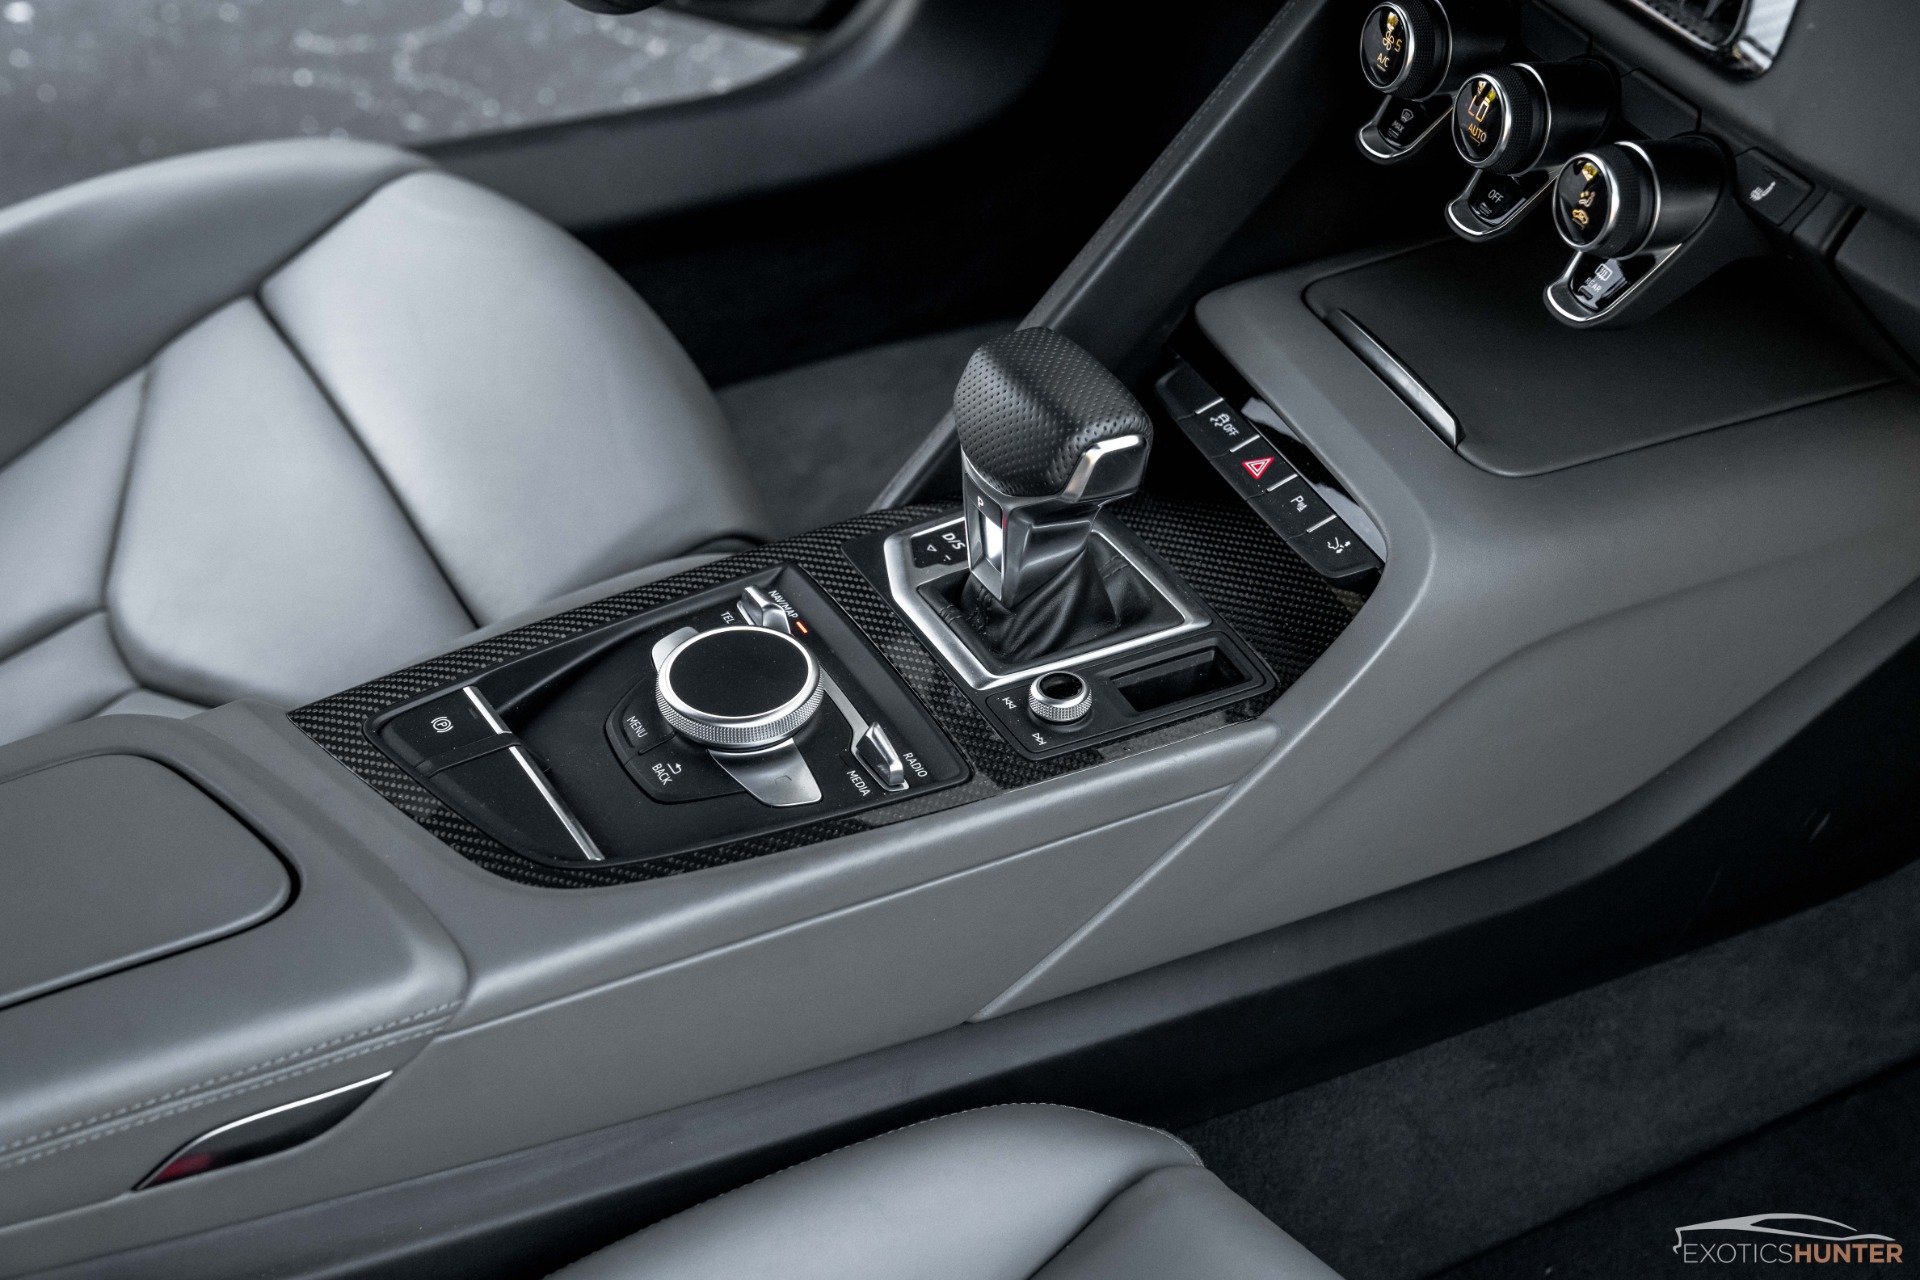 2018 Audi A4 Avant (B9) Exterior/Interior Walkaround 